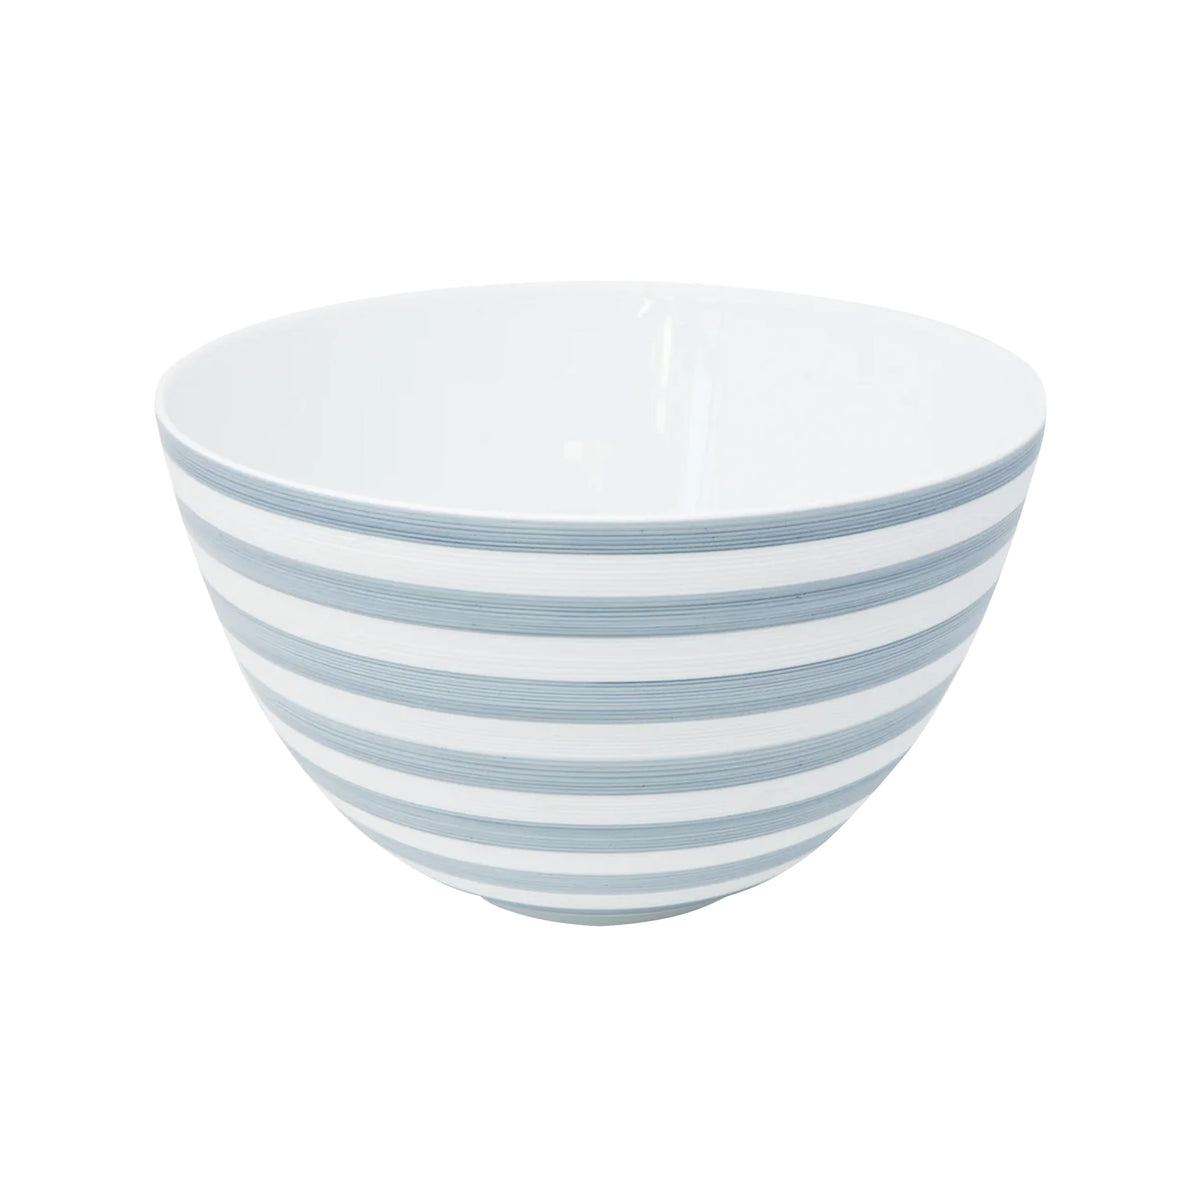 HEMISPHERE Storm Blue Striped - Salad serving bowl, maxi